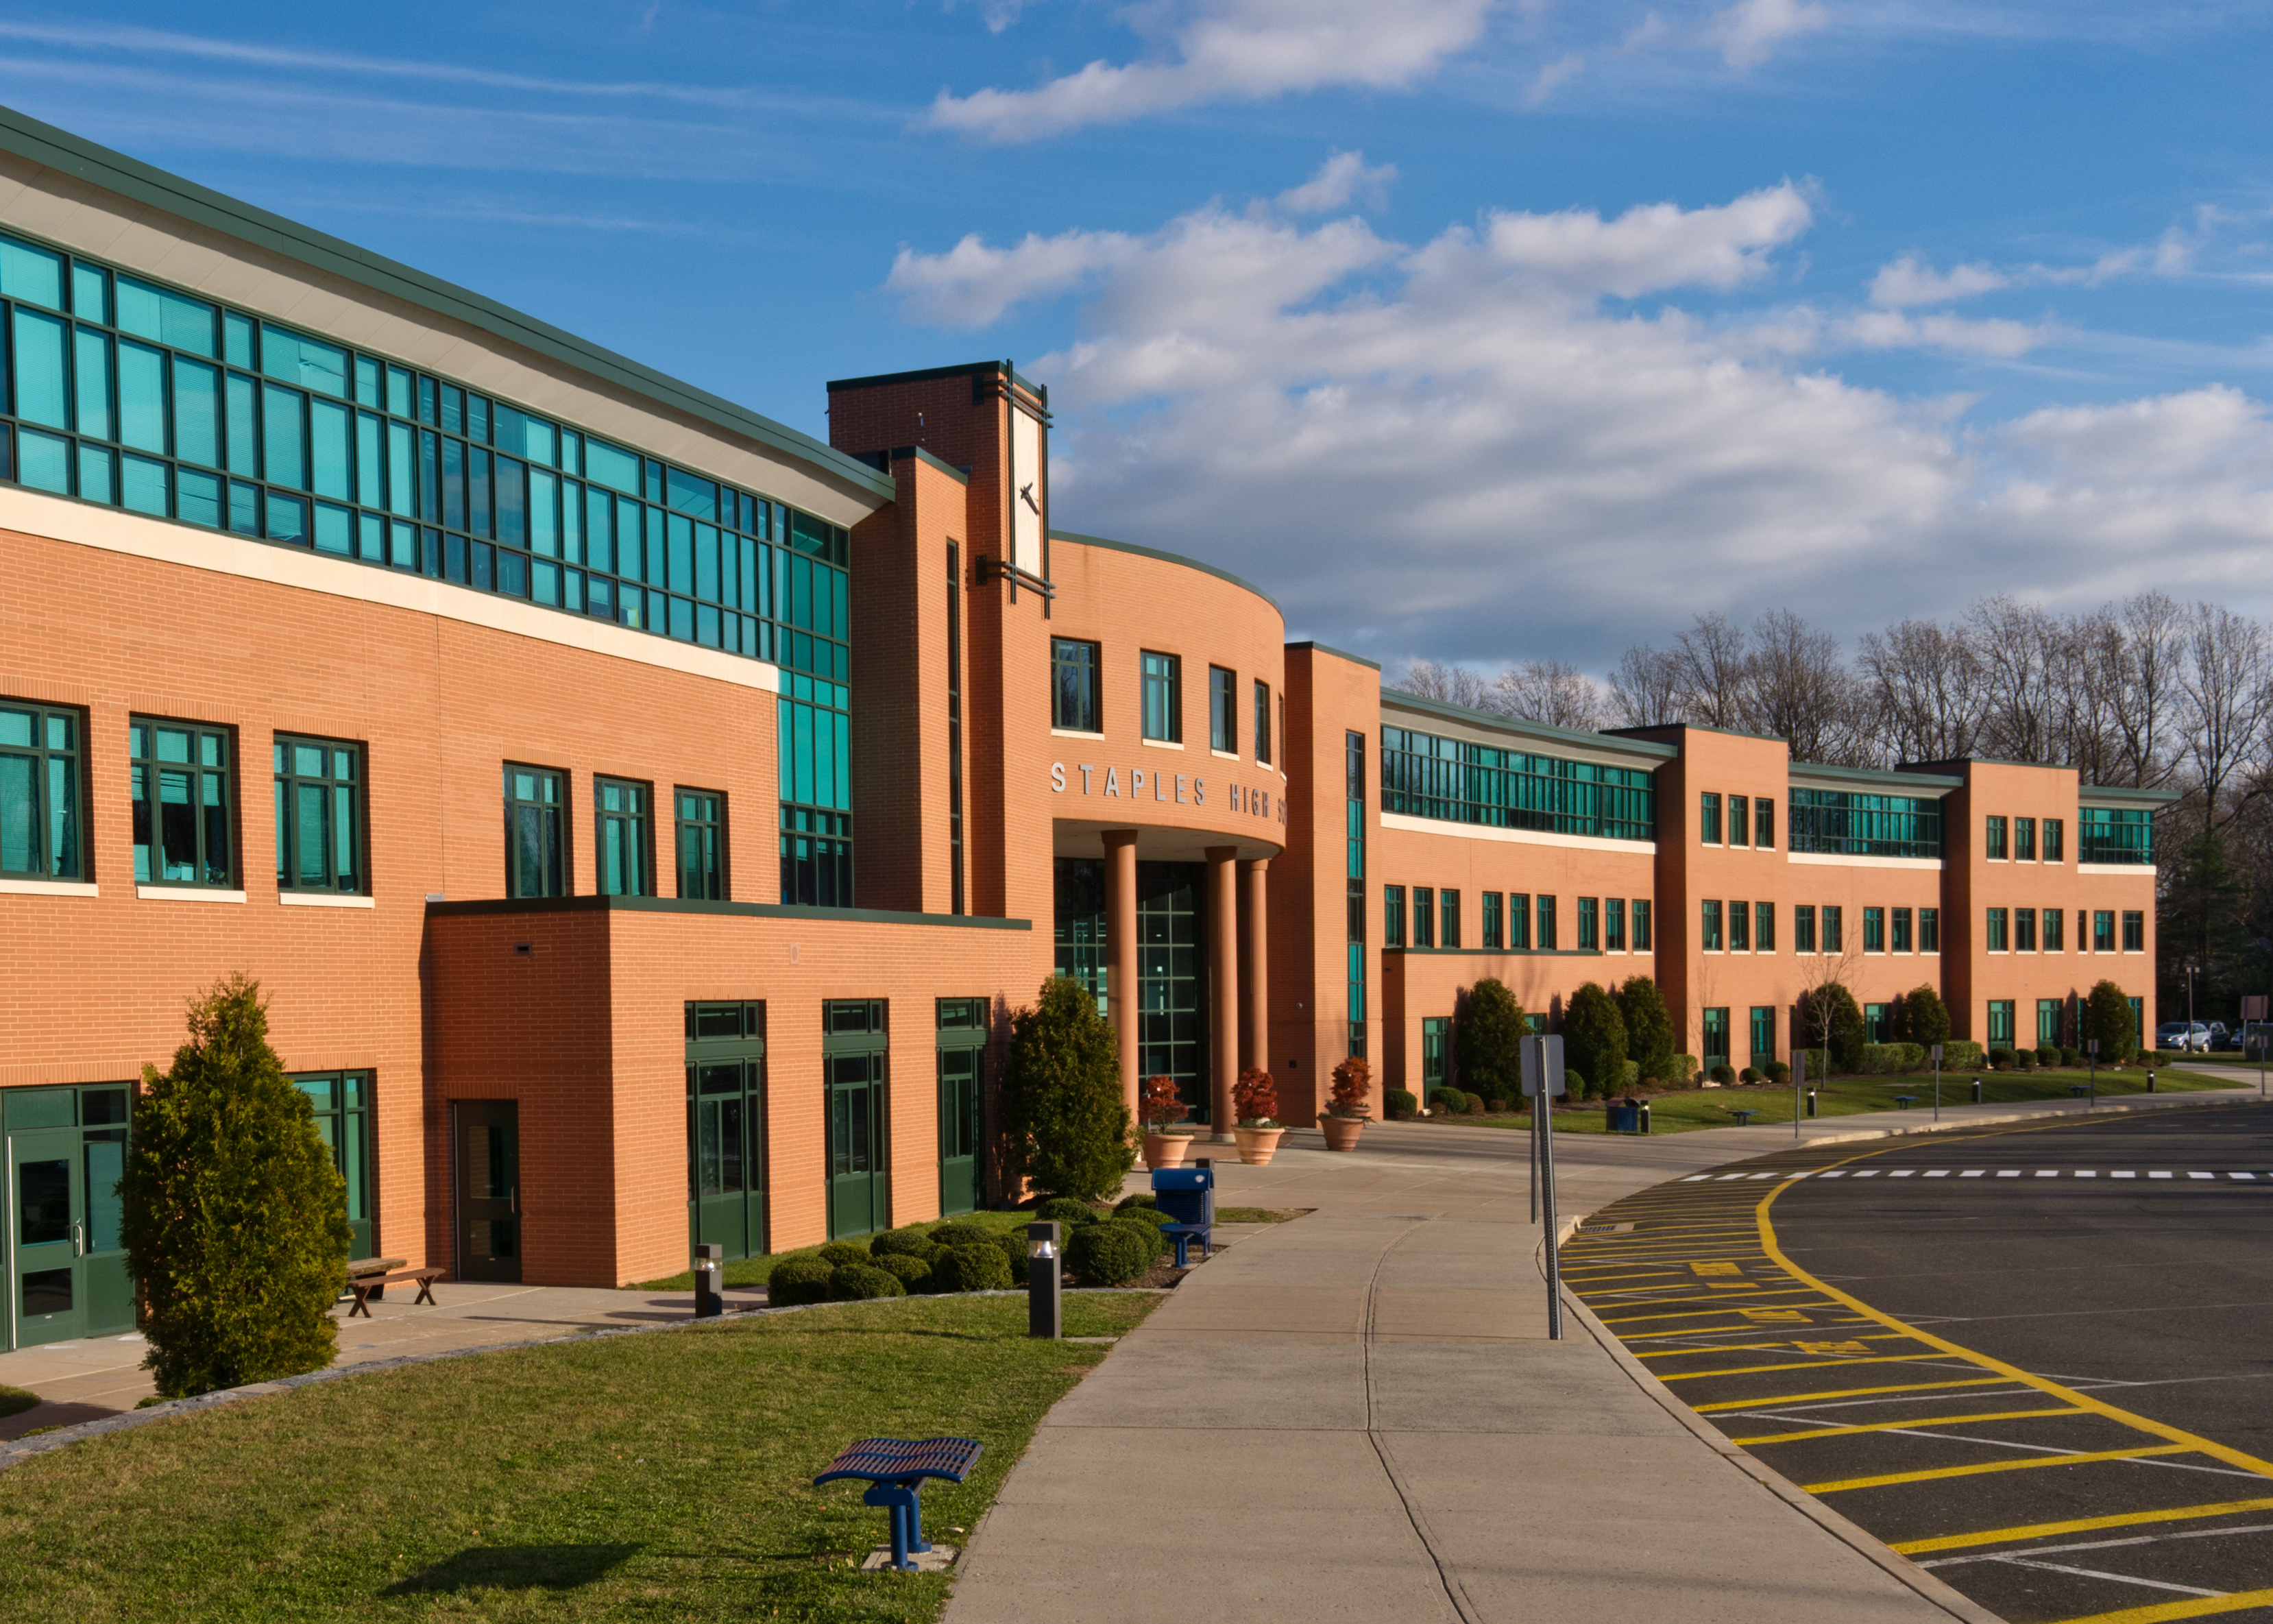 File:Staples High School, Westport, CT.jpg - Wikimedia Commons